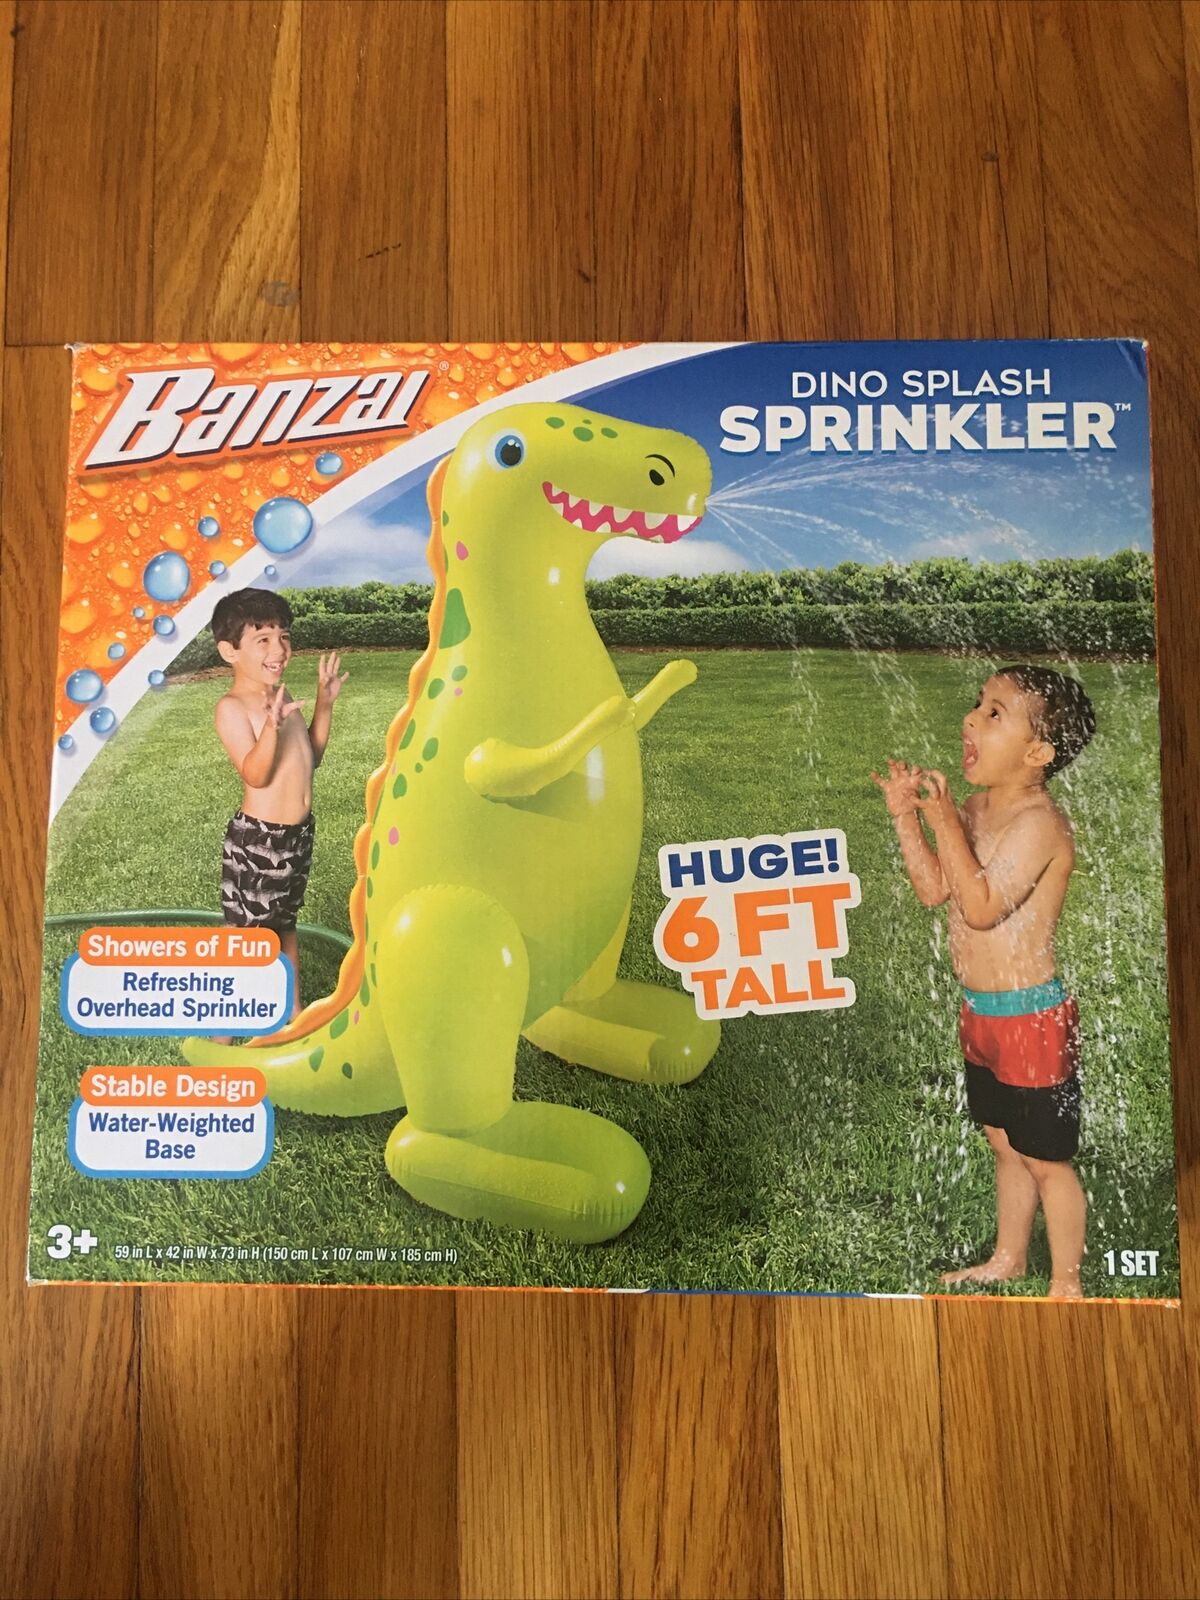 Banzai Dino Splash Sprinkler Lawn Summer Yard Water T Rex Banzai